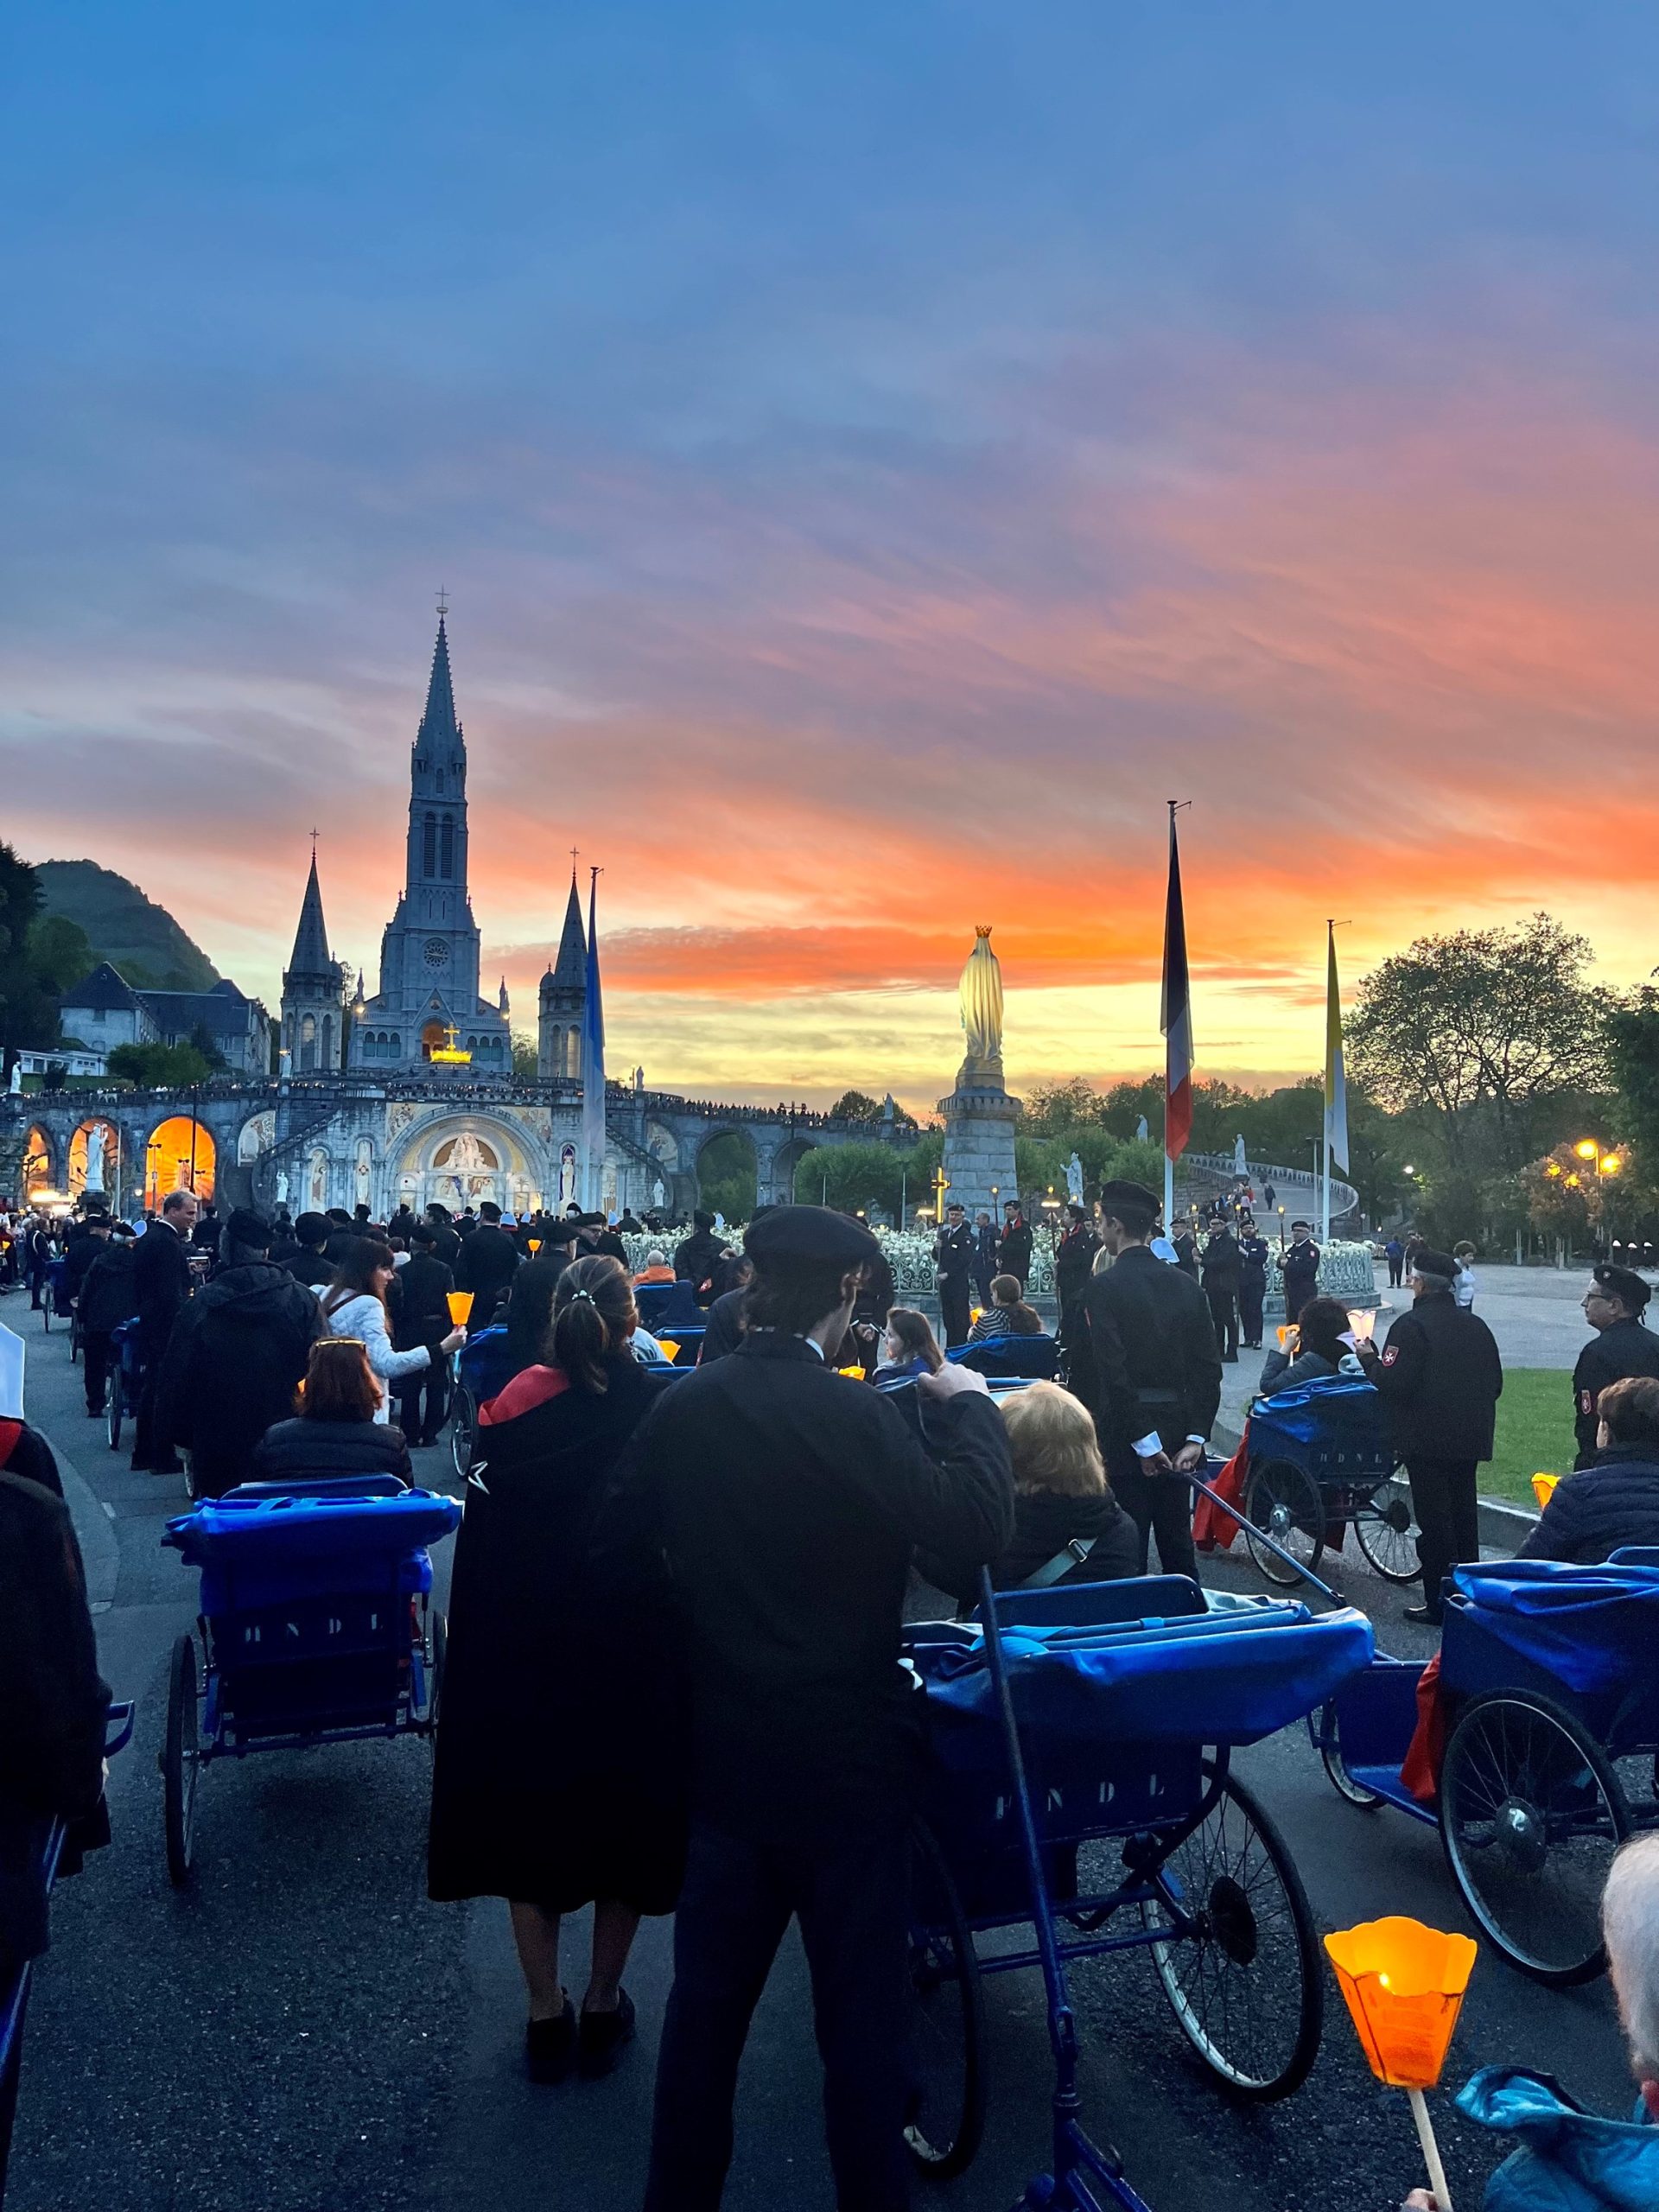 65th international pilgrimage to Lourdes, led by Grand Master Fra’ John Dunlap